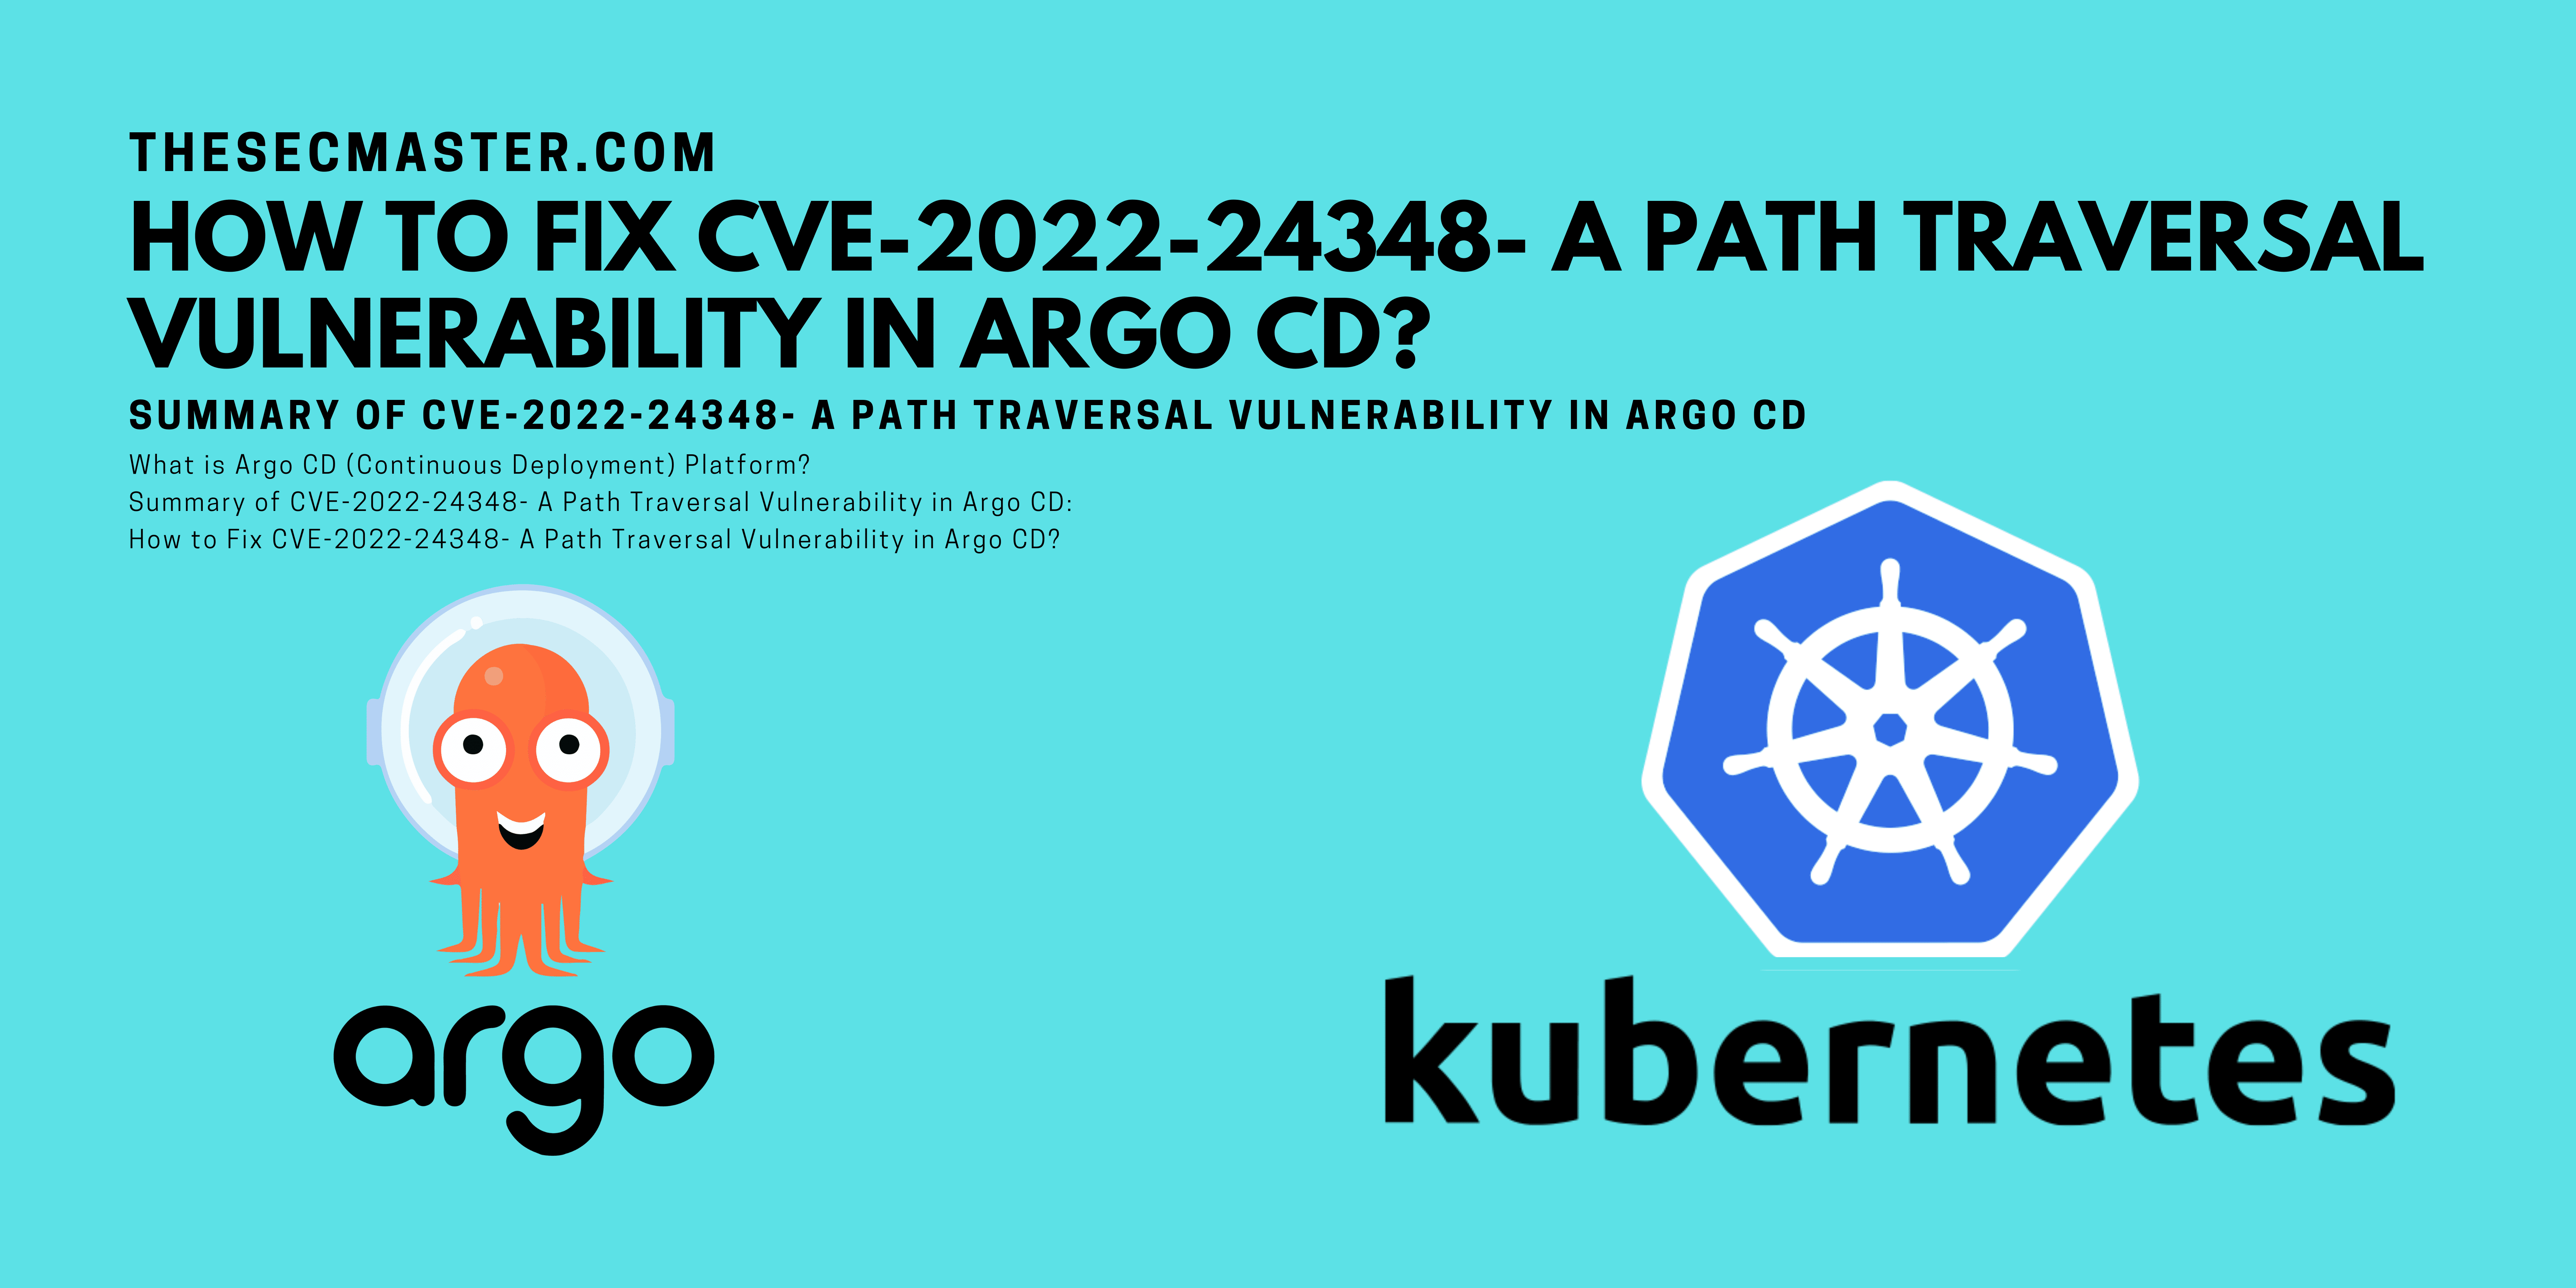 How To Fix Cve 2022 24348 A Path Traversal Vulnerability In Argo Cd